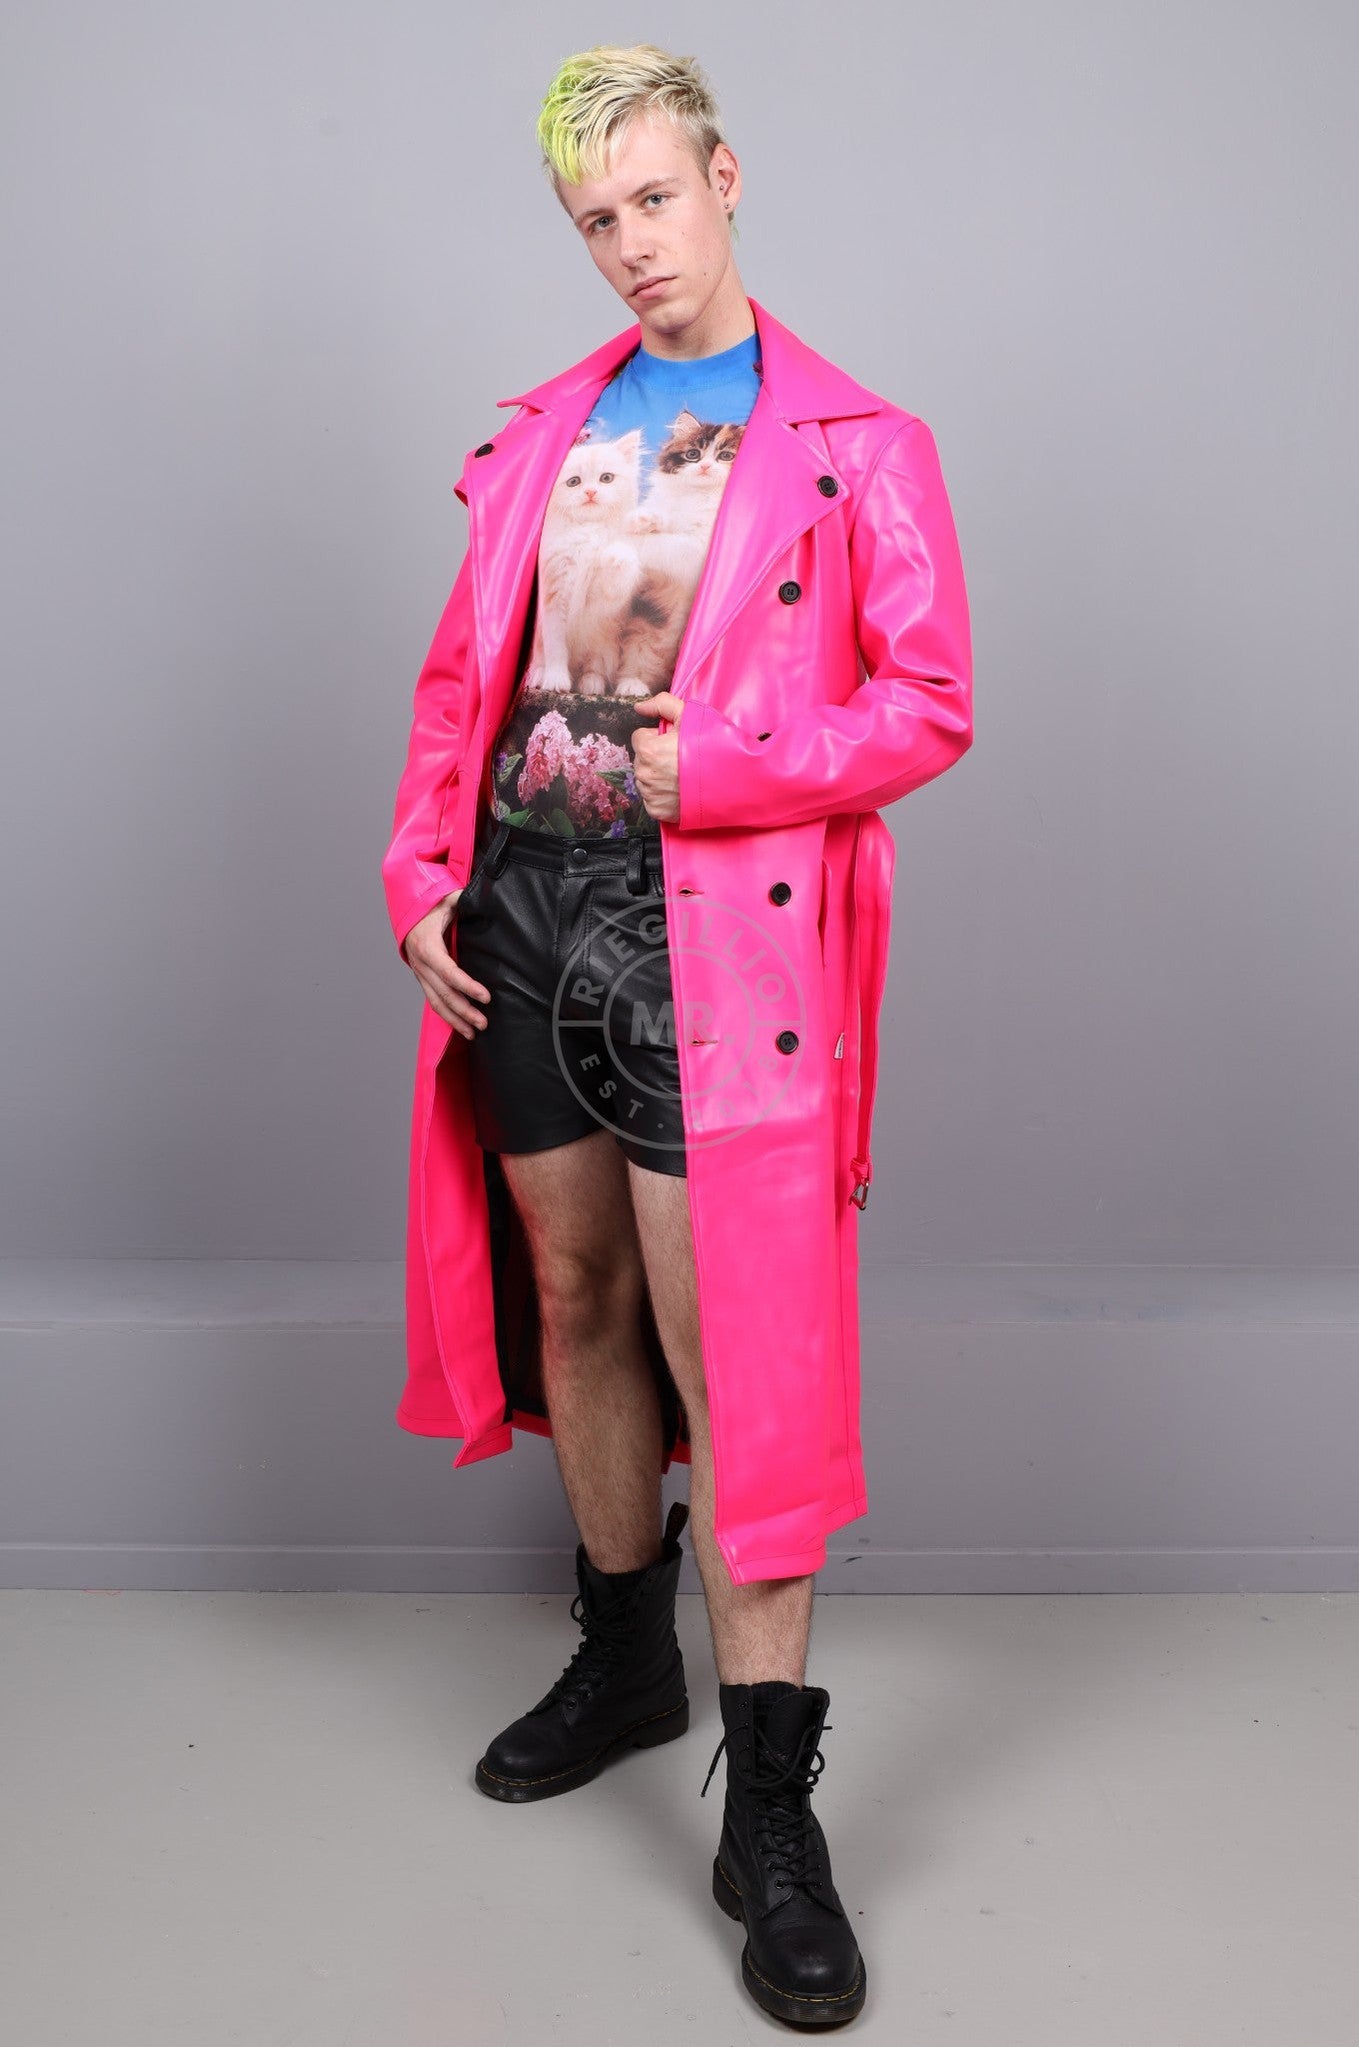 MR. Trench Coat - Neon Pink at MR. Riegillio